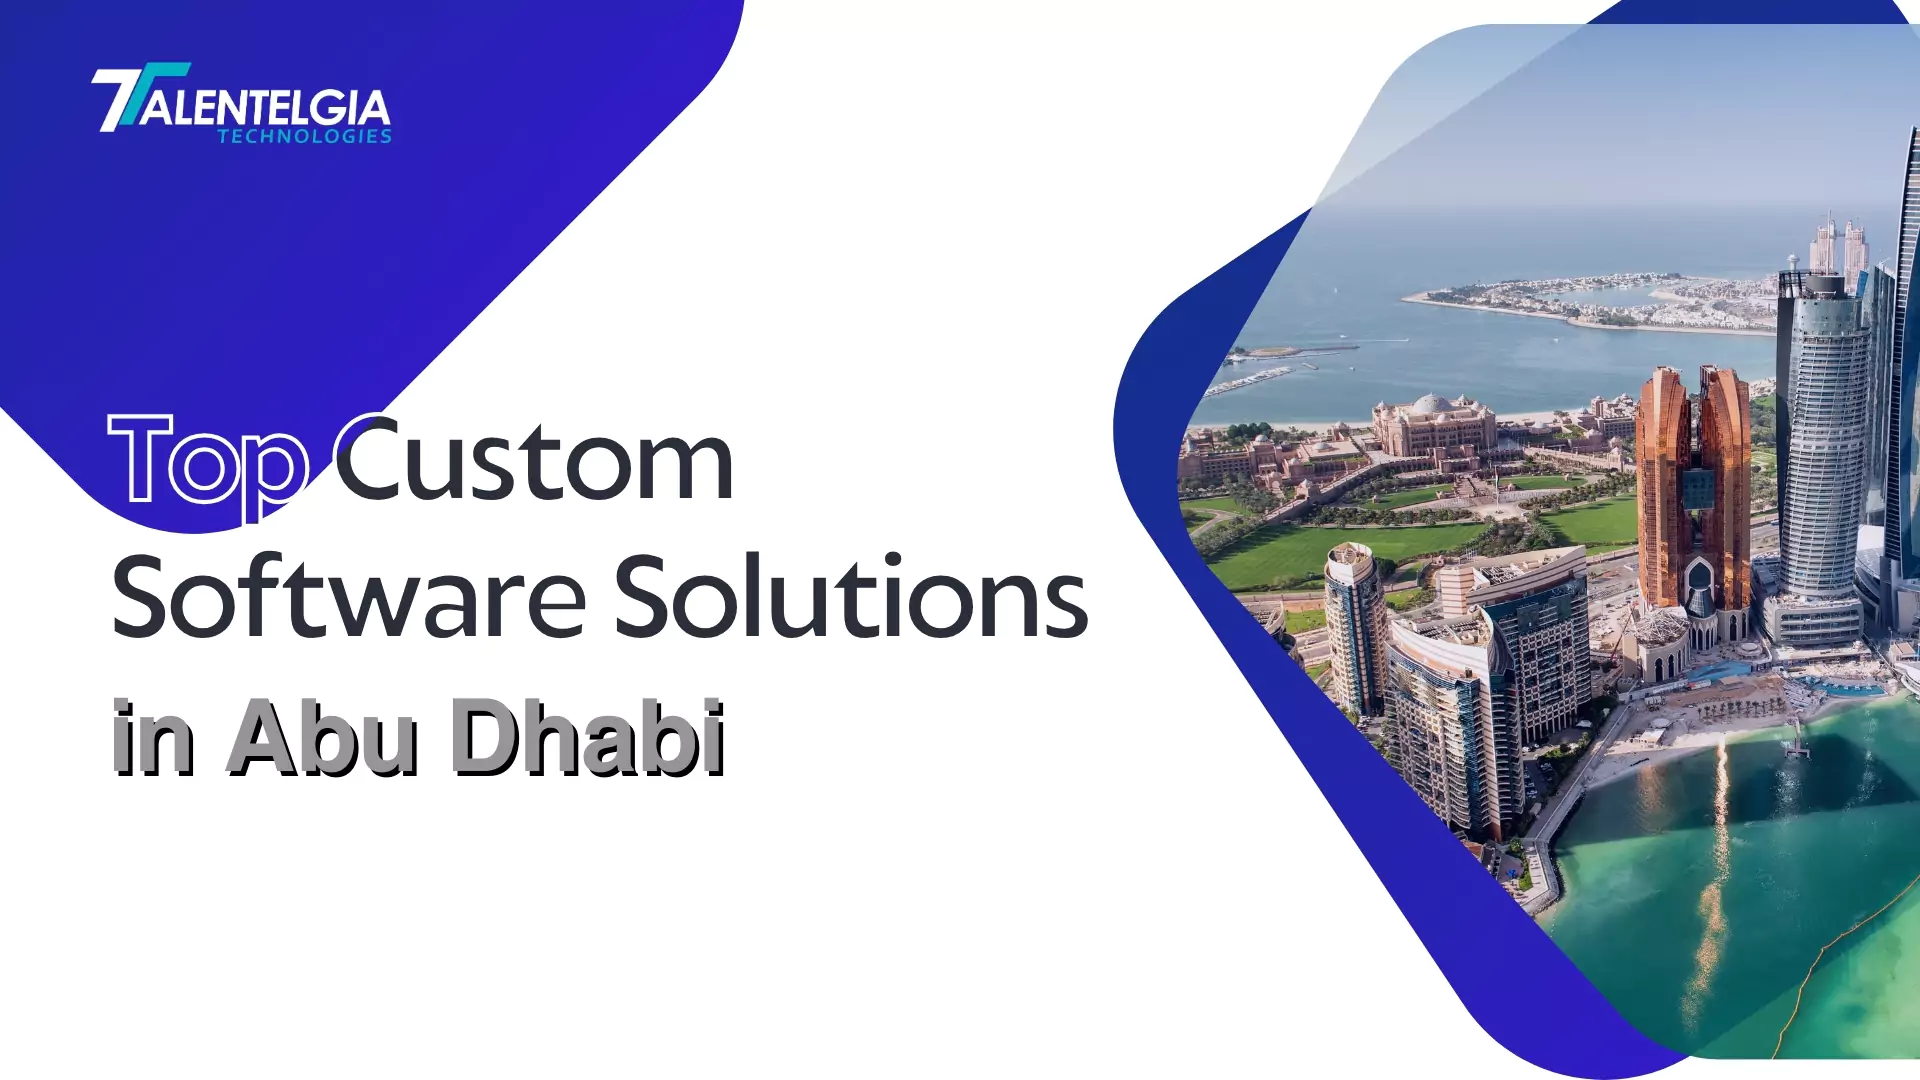 Top Custom Software Solutions in Abu Dhabi